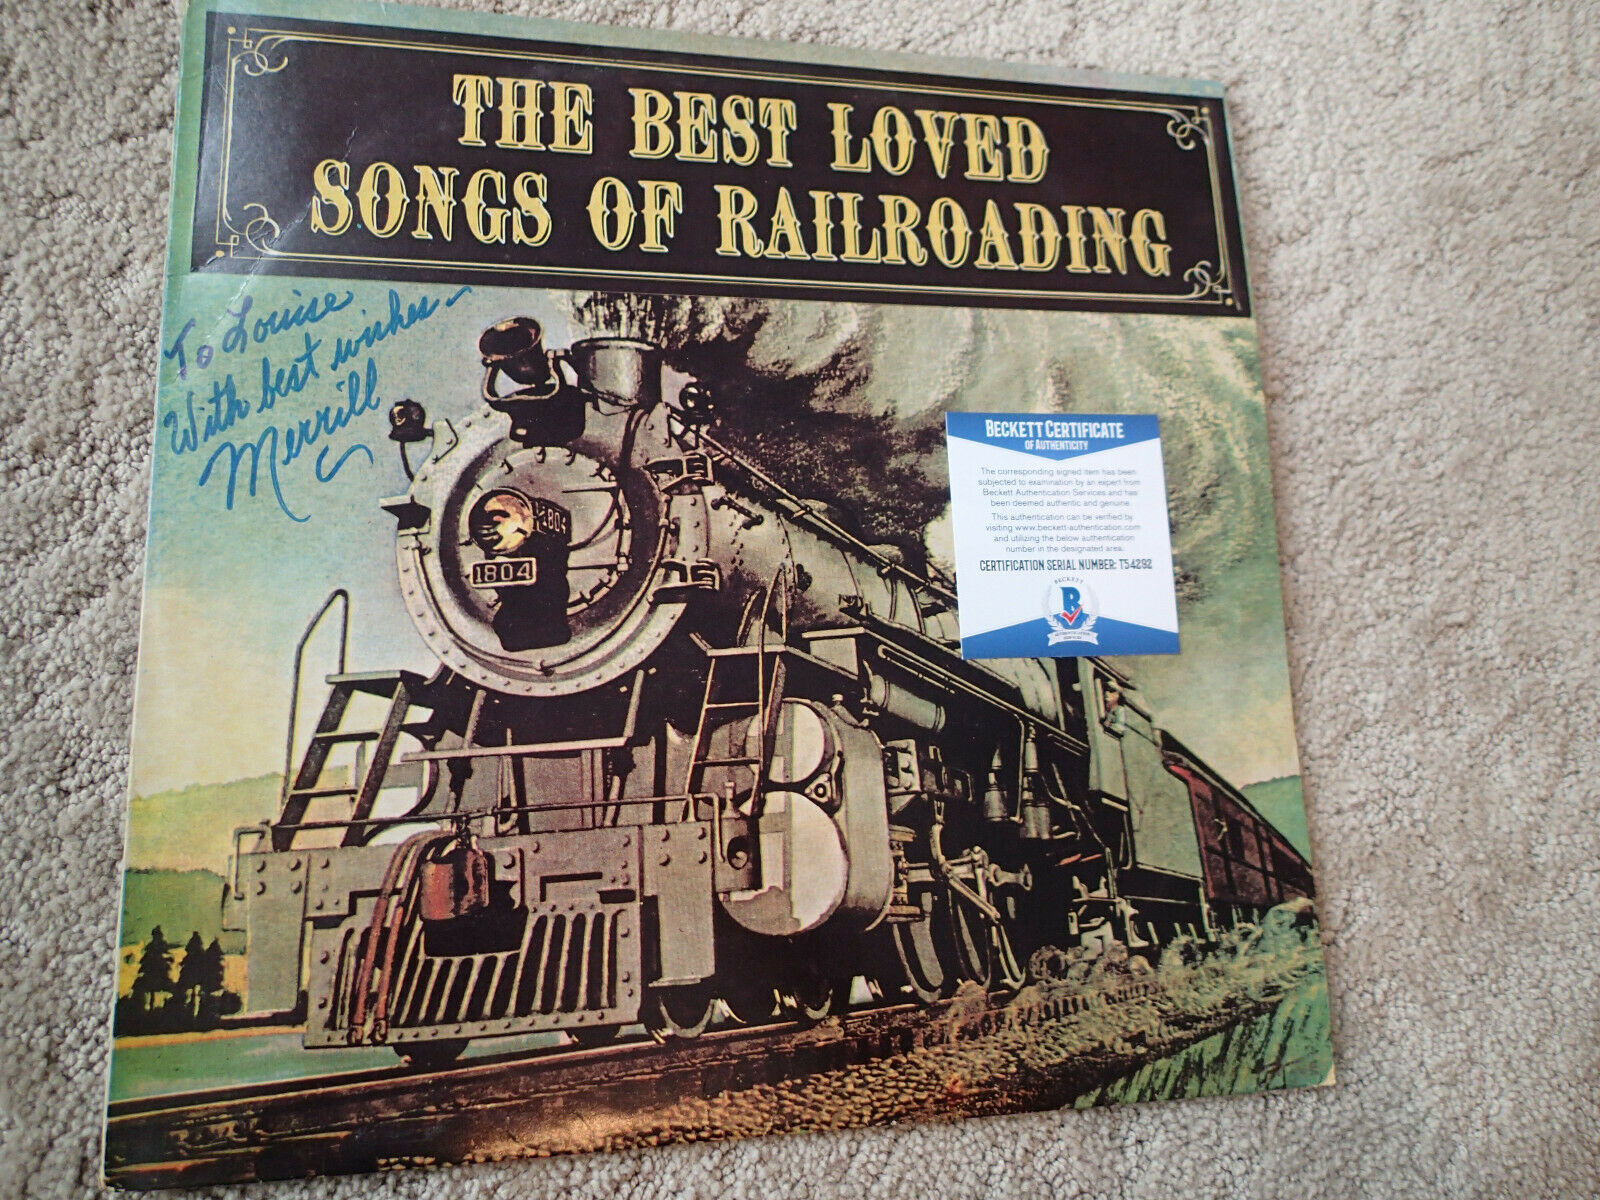 Merrill Staton Signed Autograph Songs Of The Railroad Vinyl Record Album Beckett